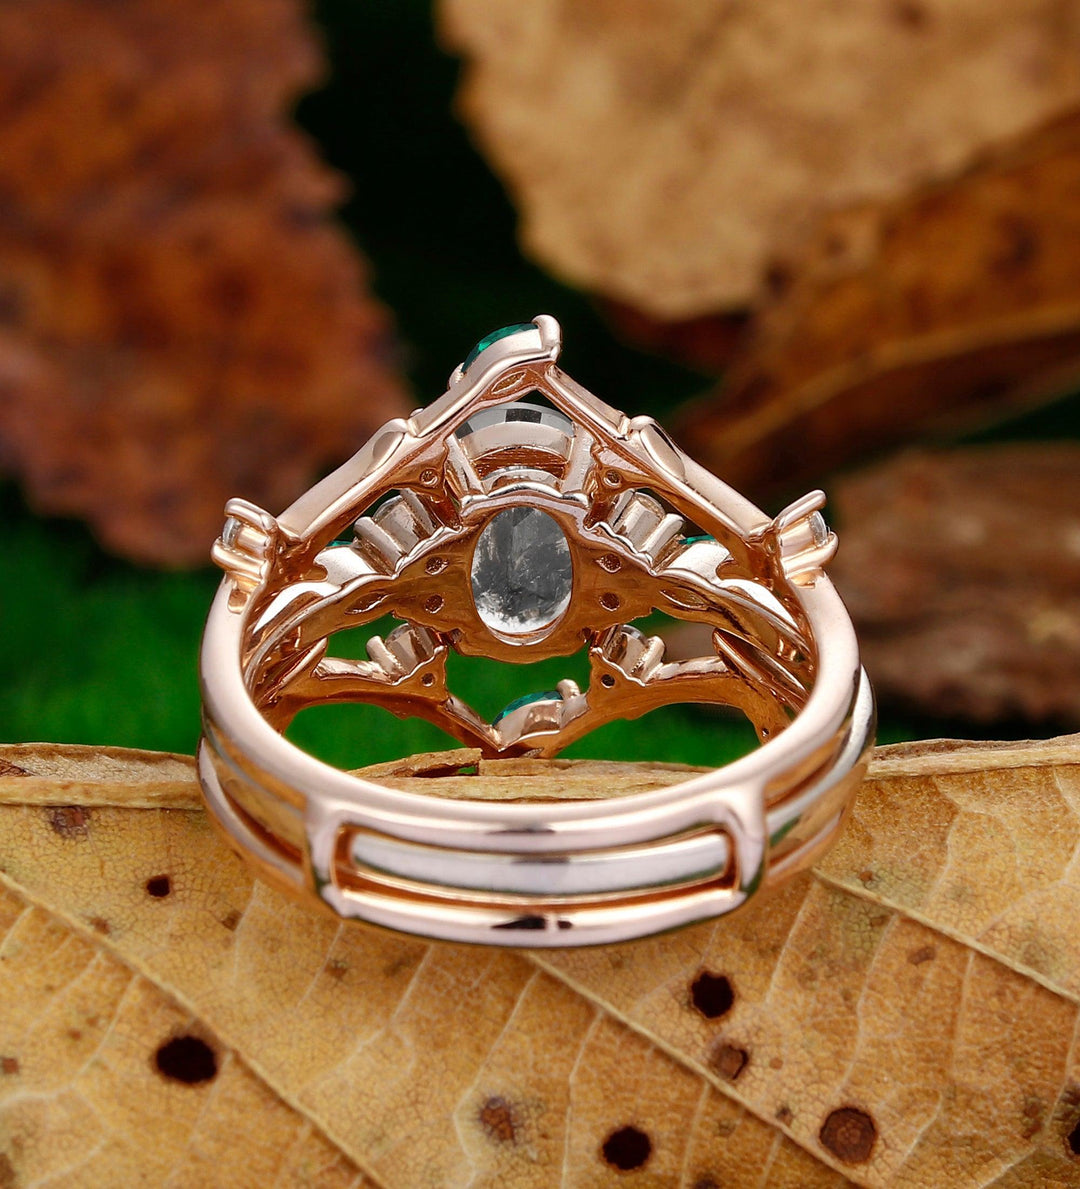 Antique Oval Shaped Herkimer Diamond Leaf Branch Emerald Enhancer Wedding Ring Set - Esdomera